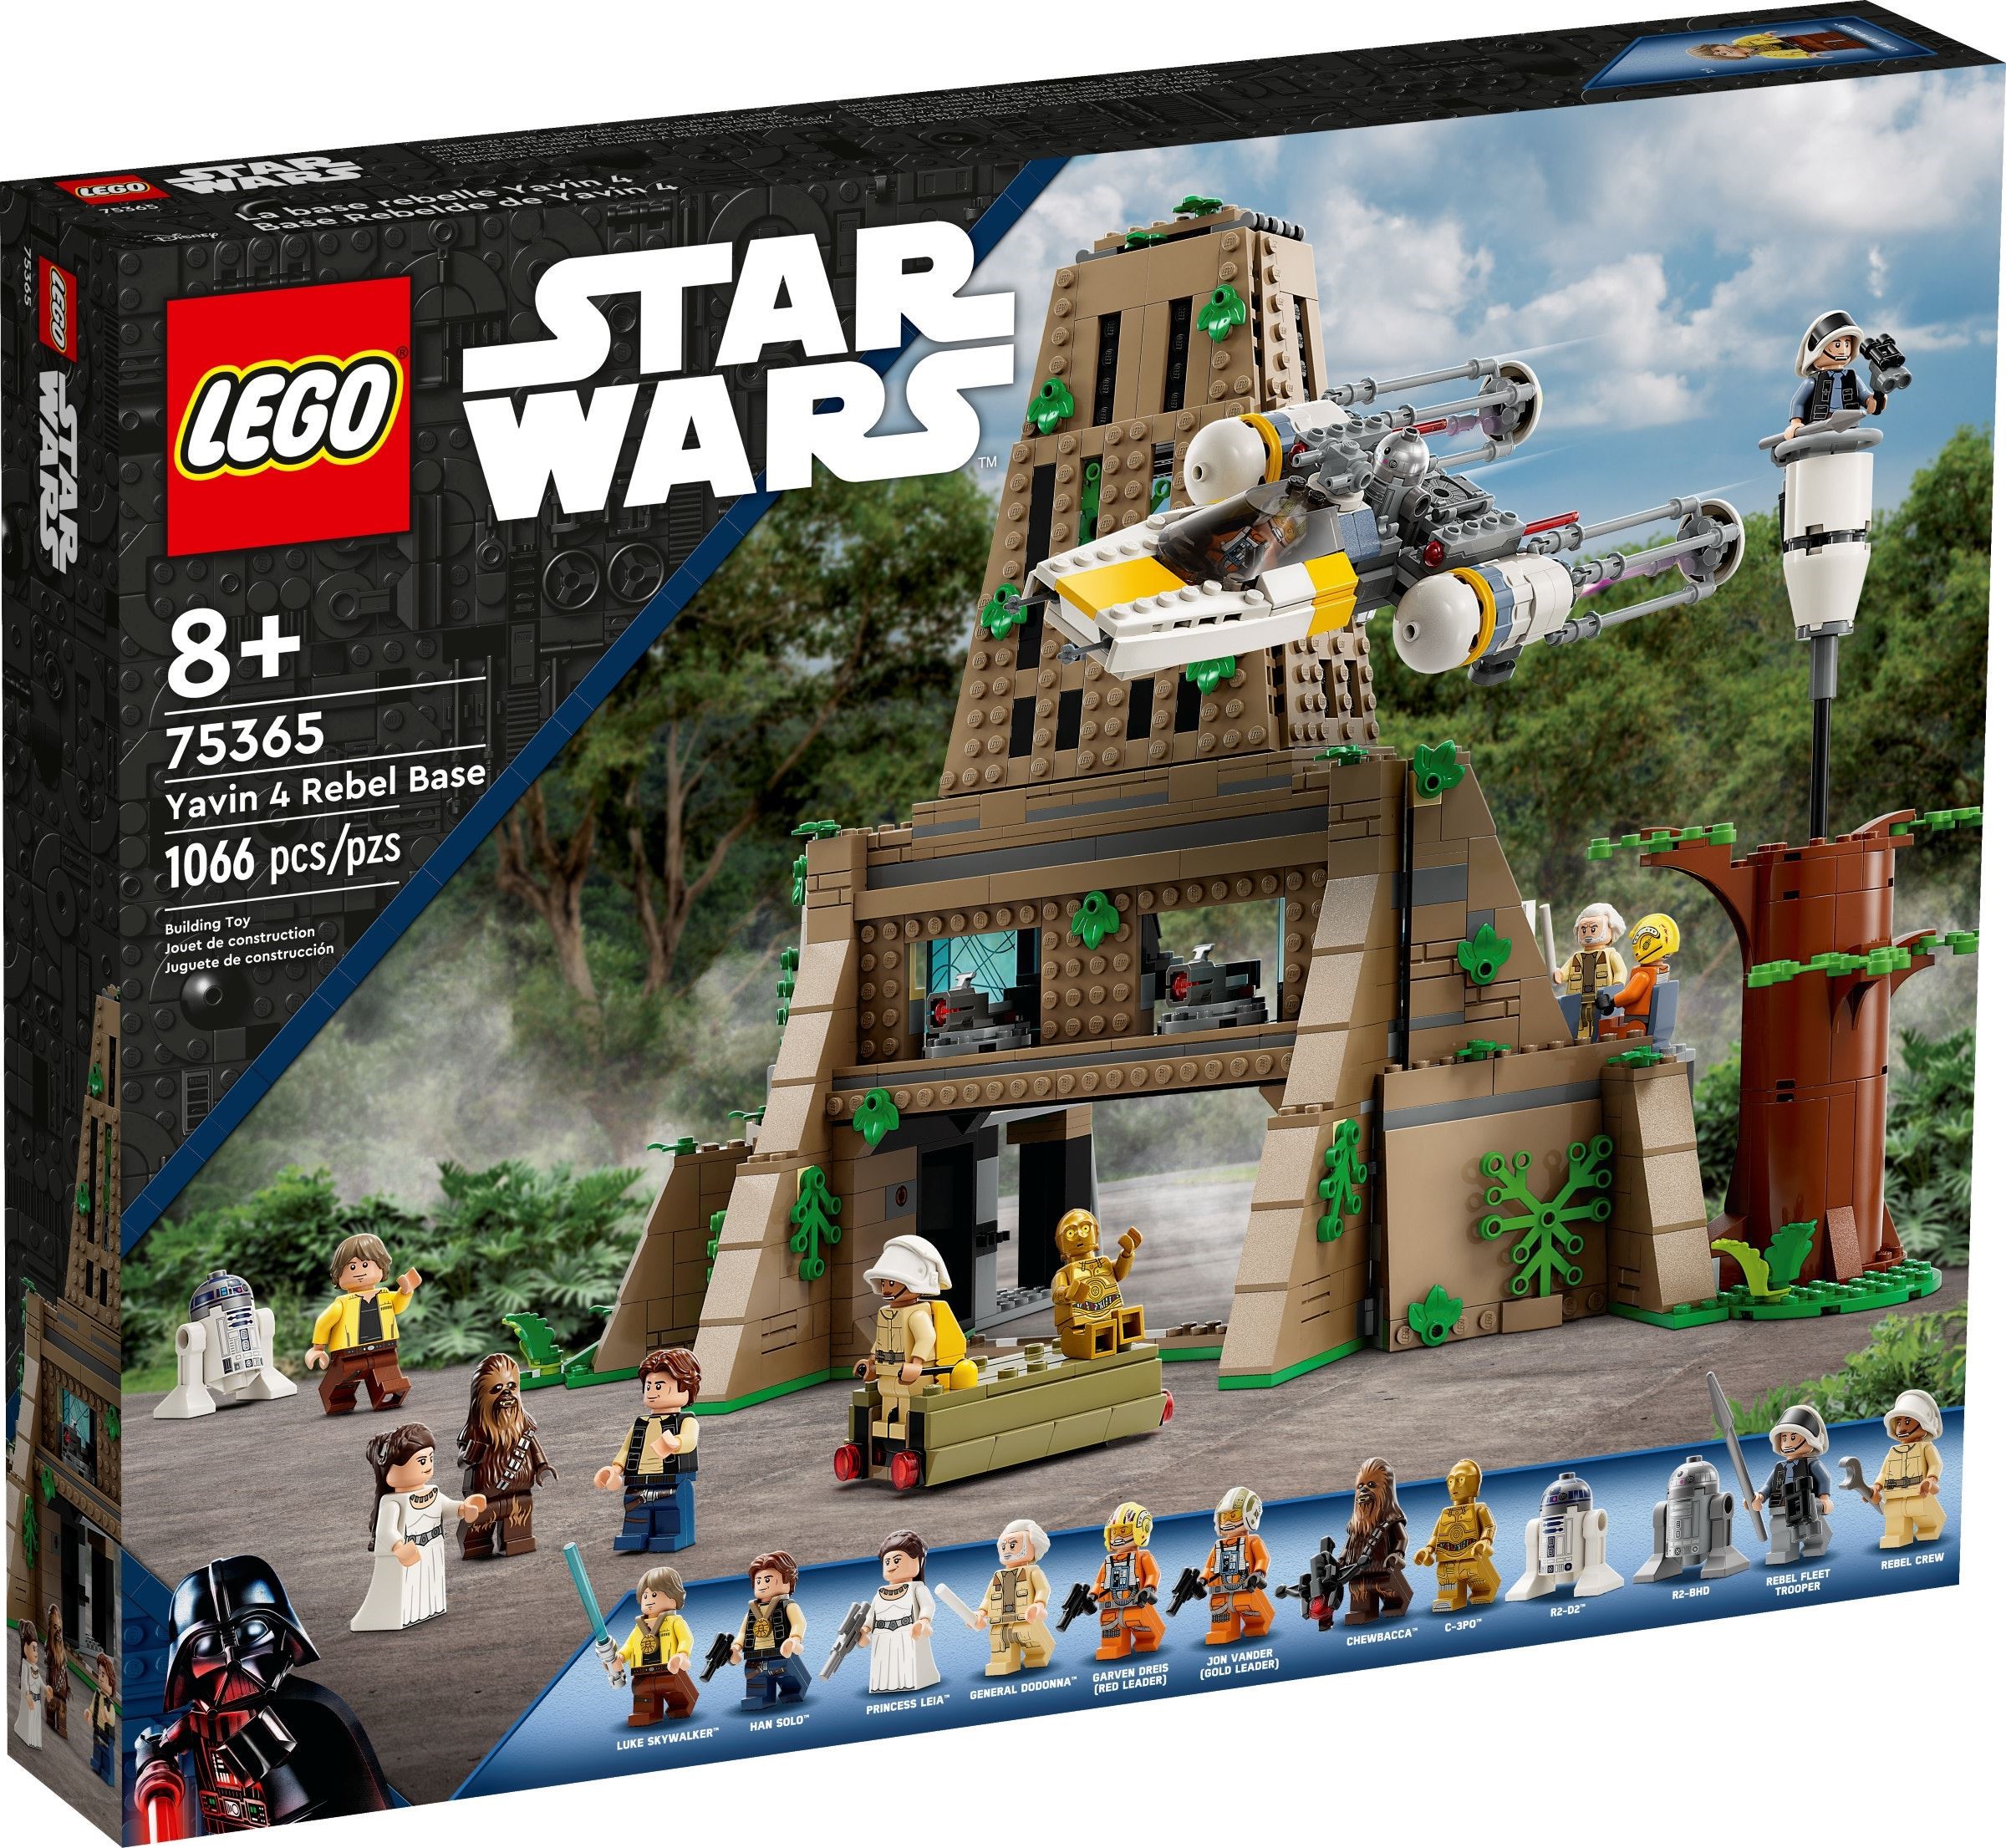 Lego 75365 Yavin 4 Rebel Base Lego Star Wars set for sale best price